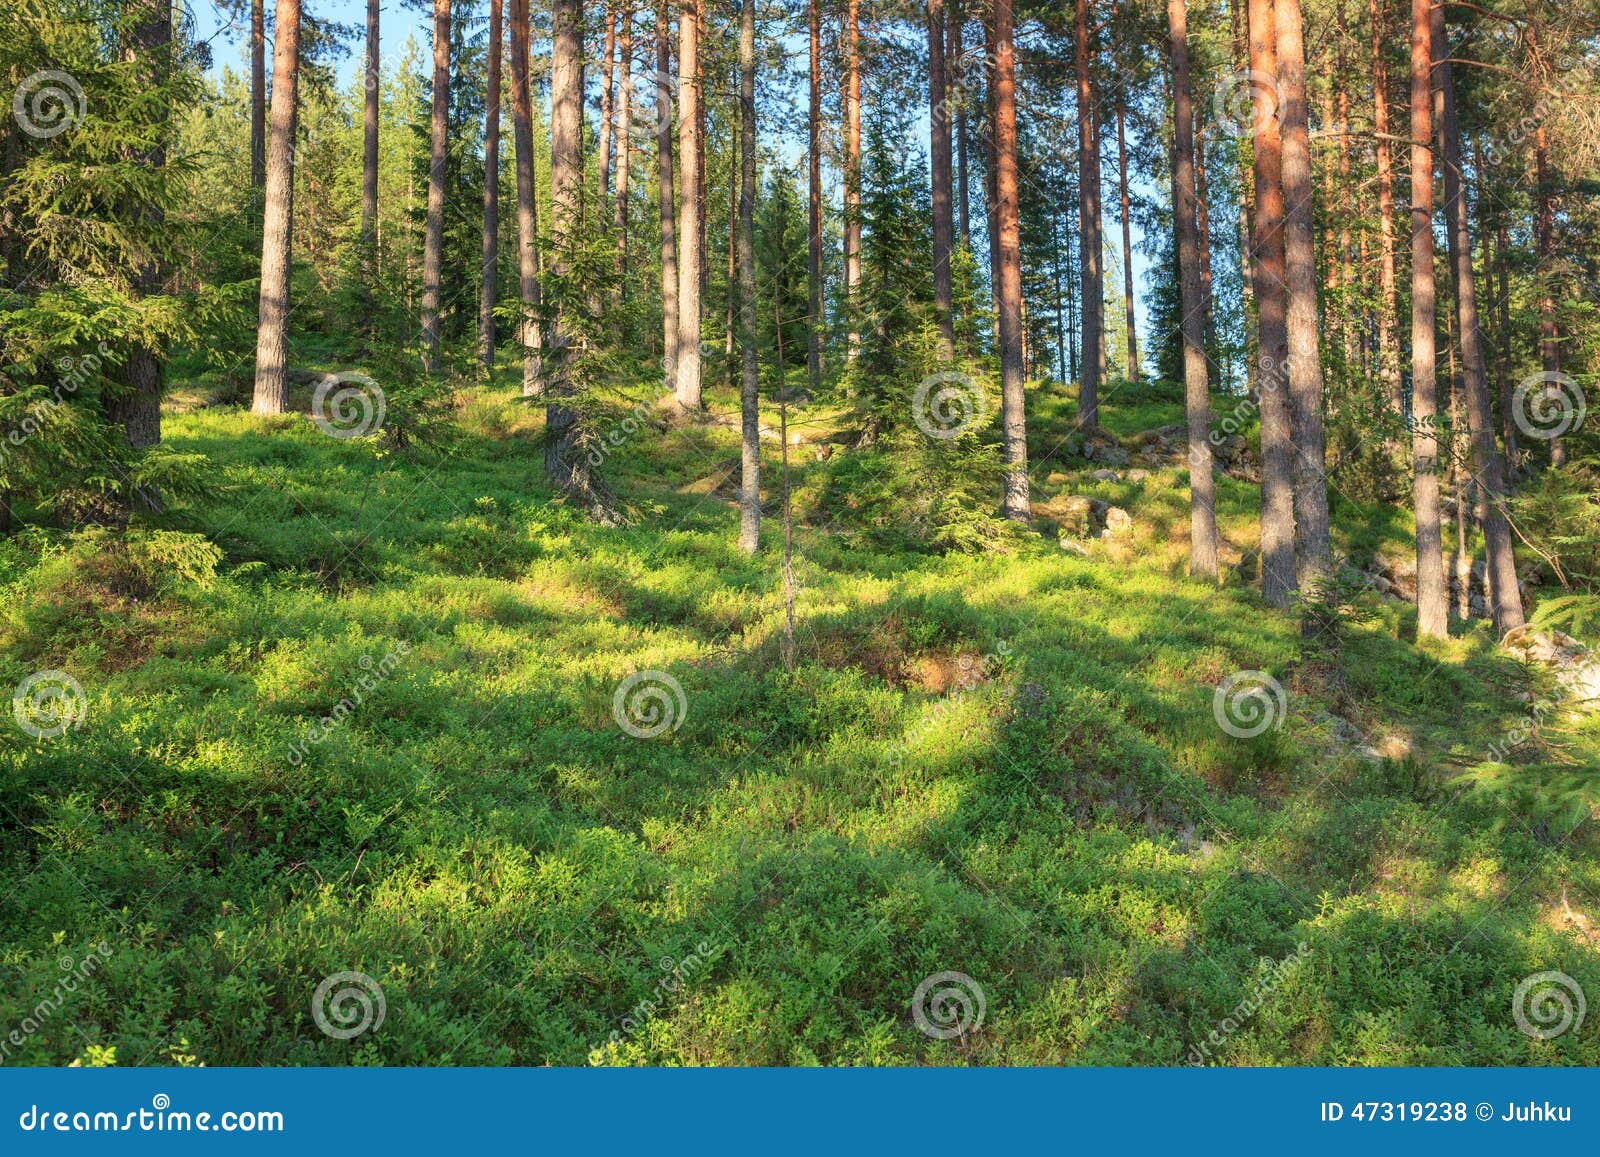 finnish forest at summer